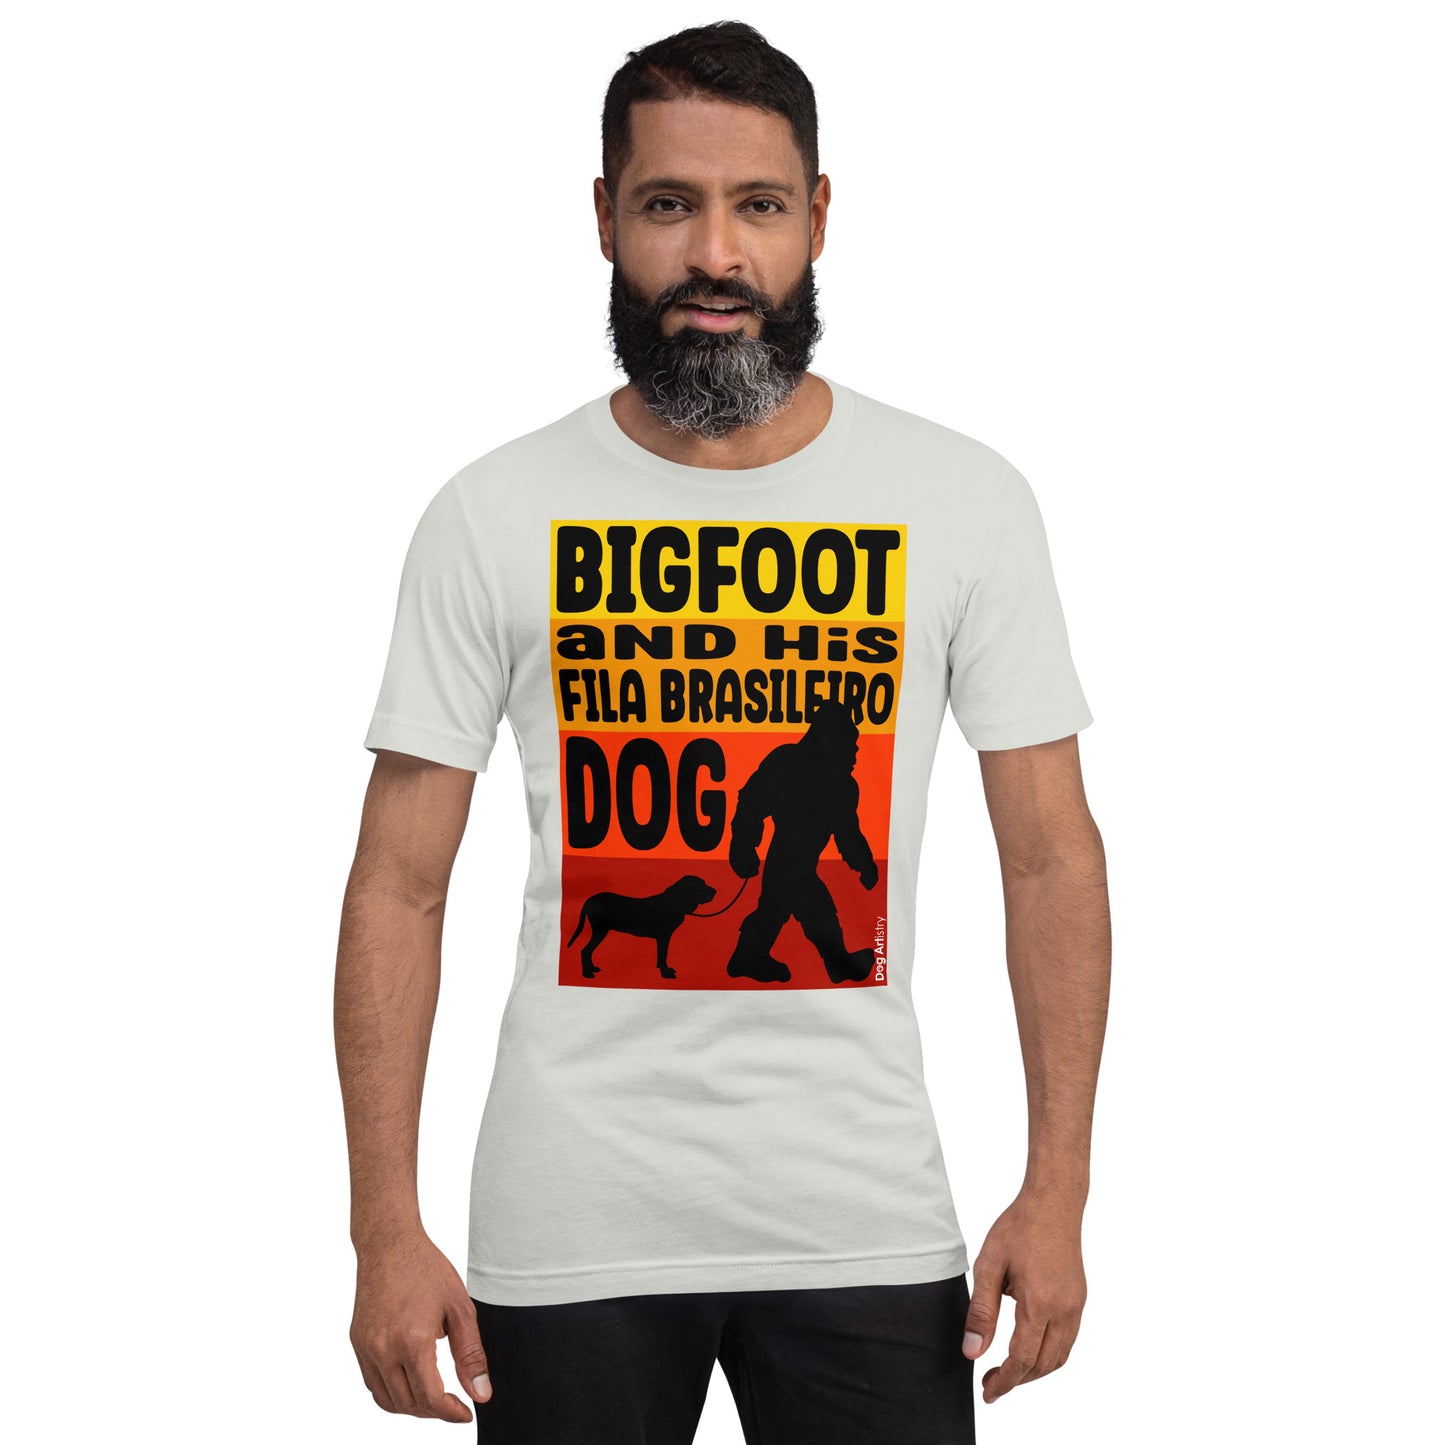 Bigfoot and his Fila Brasileiro unisex silver t-shirt by Dog Artistry.